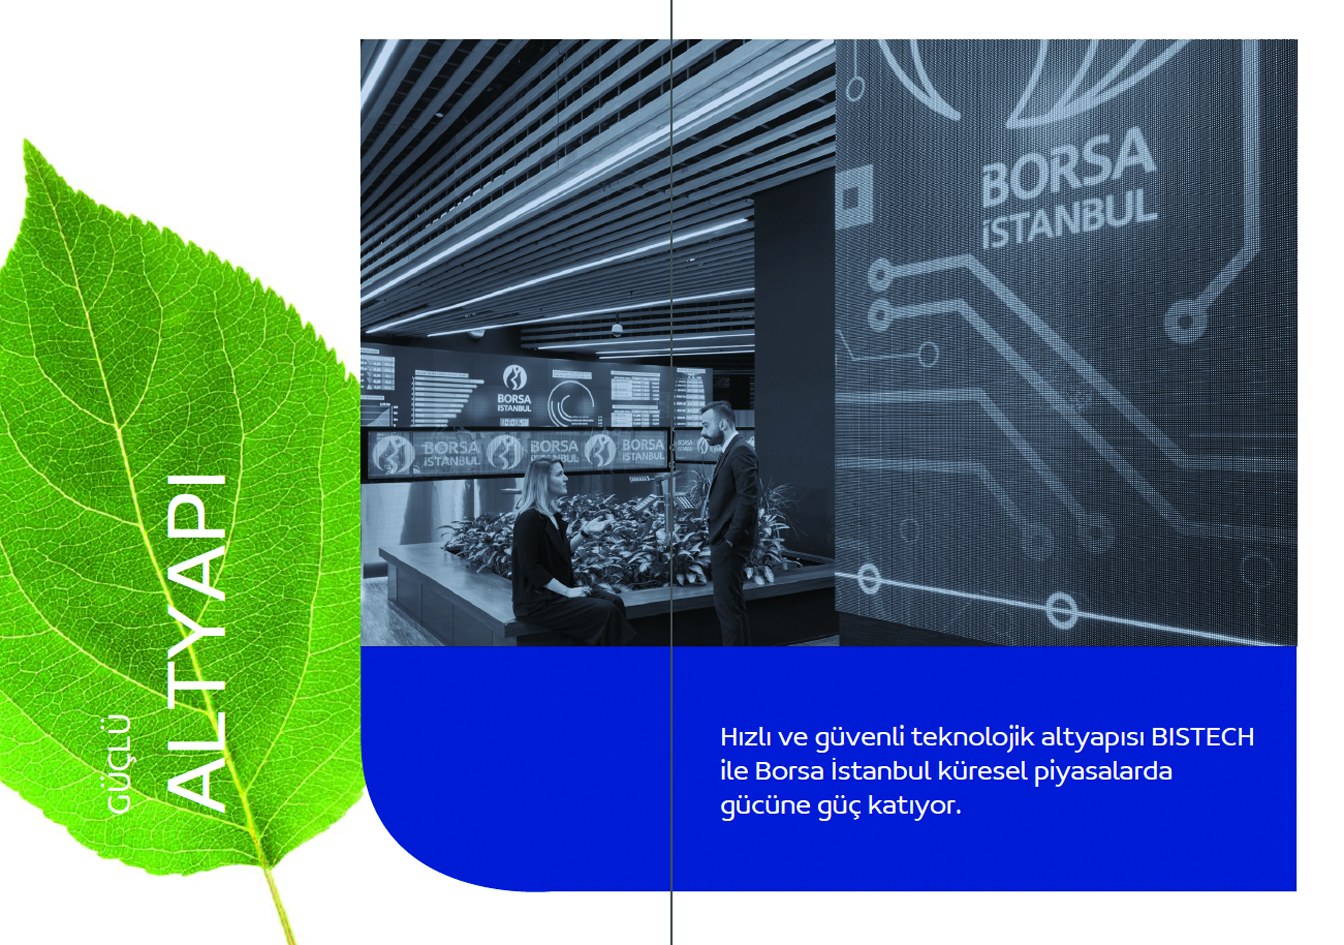 BORSA İSTANBUL / 2019 Entegre Faaliyet Raporu / 2019 Integrated Annual Report